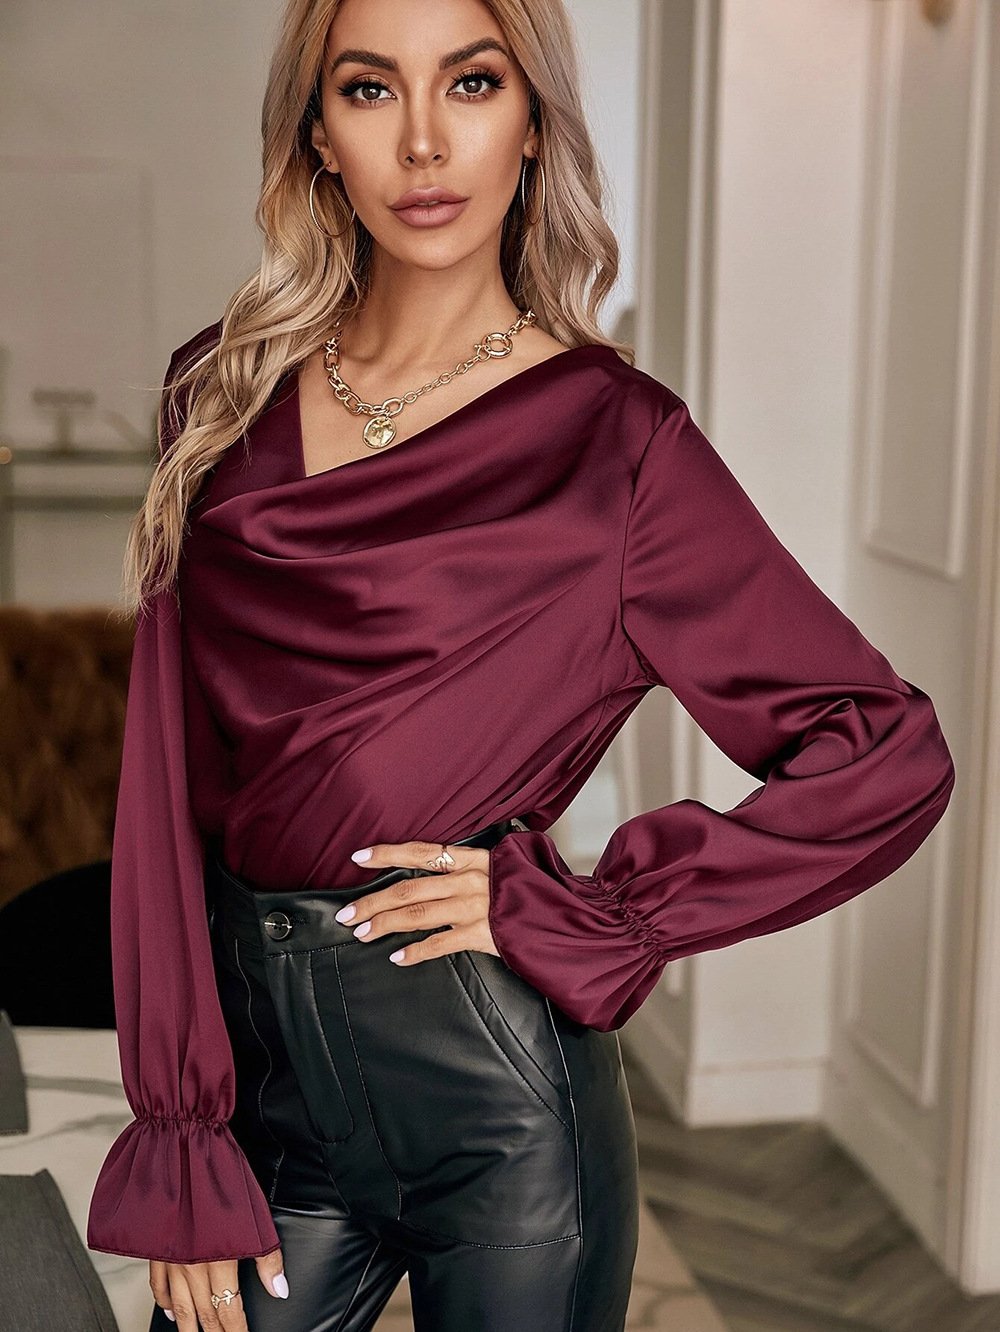 Elegant Satin Pullover Long Sleeves Women Shirts-Shirts & Tops-Wine Red-S-Free Shipping at meselling99